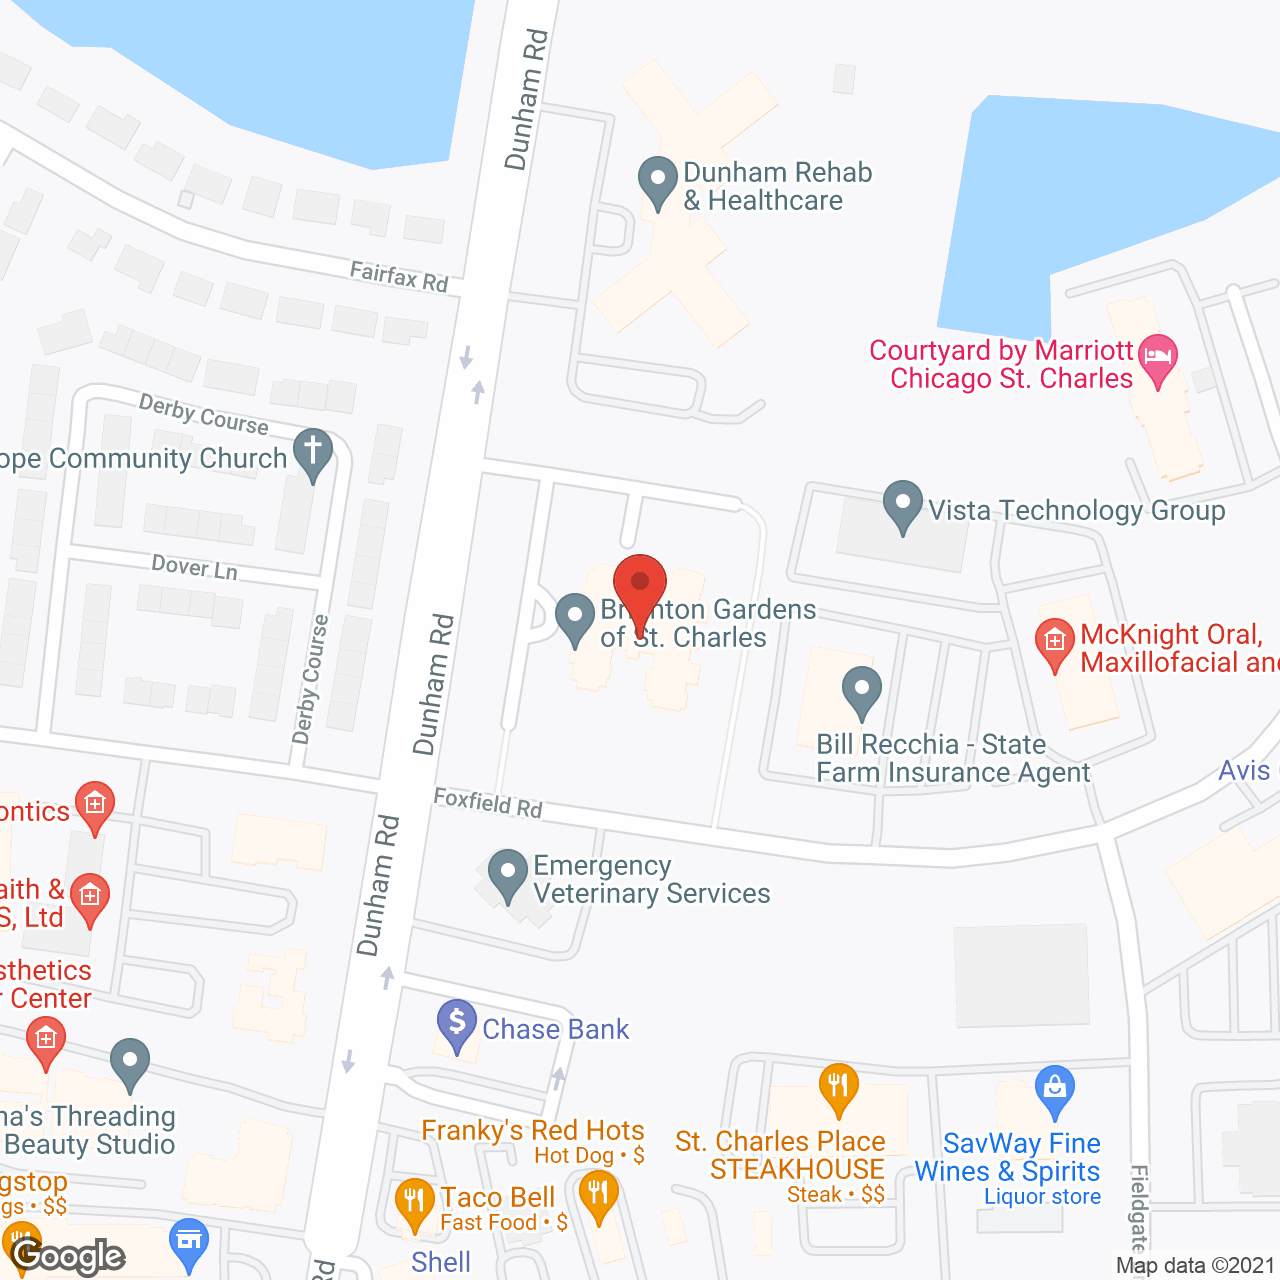 Brighton Gardens of St. Charles in google map